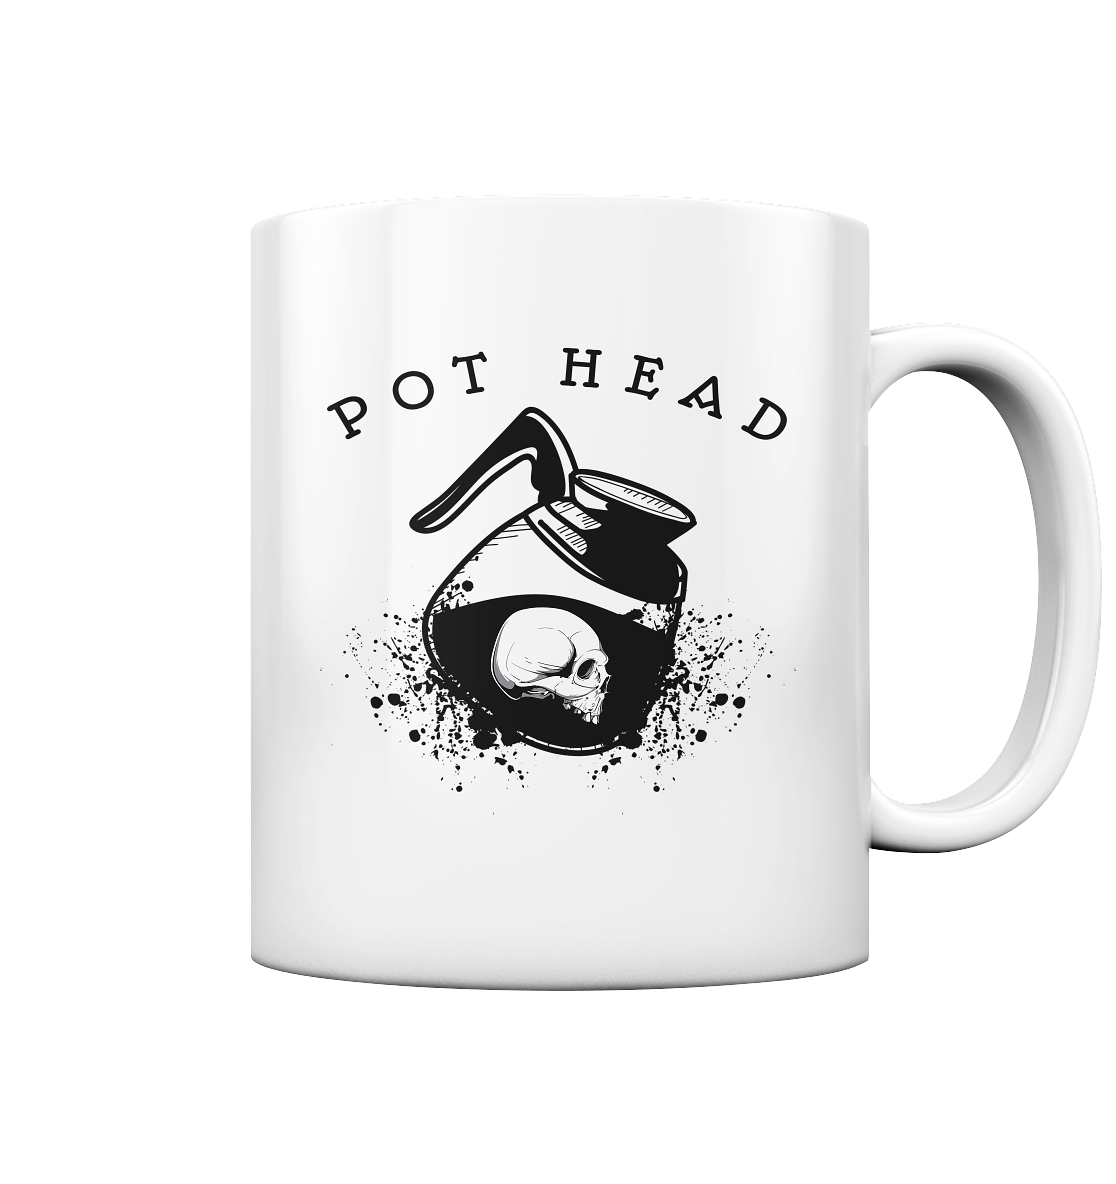 Pot Head Kaffee Skull - Tasse glossy